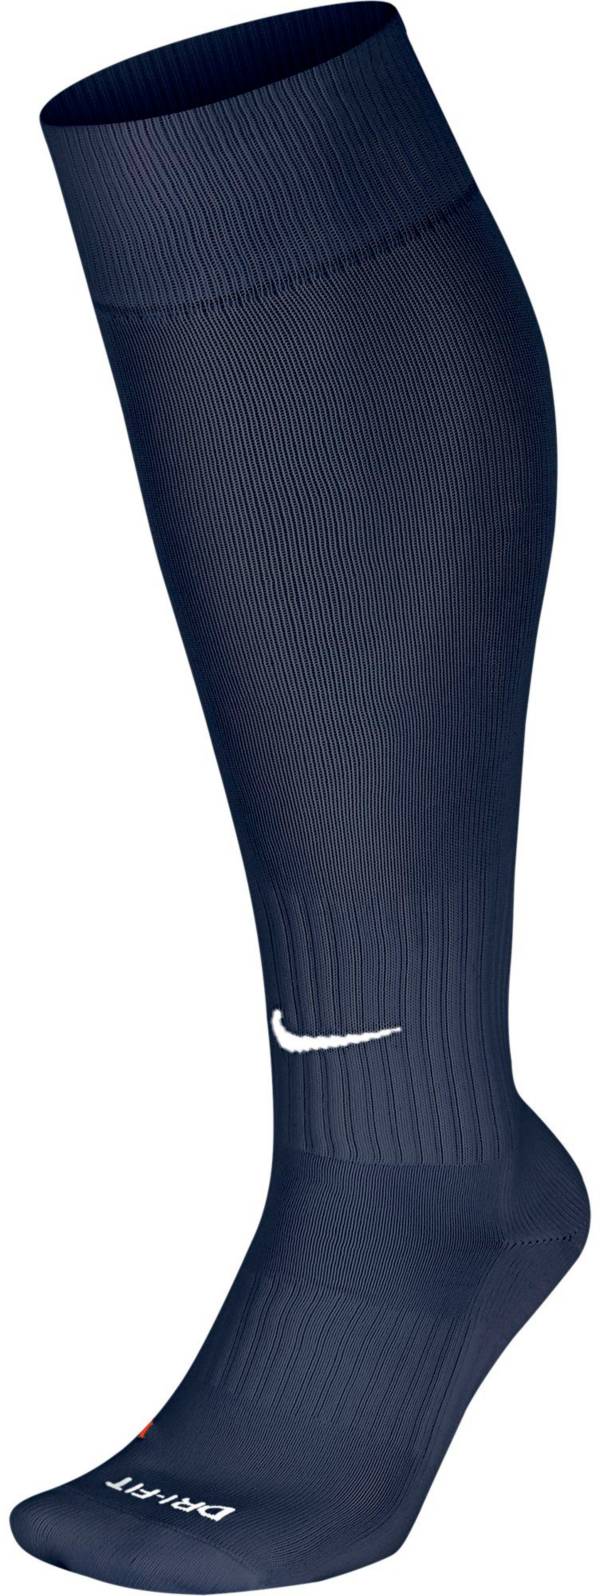 Nike Over-The-Calf Socks Dick's Sporting Goods